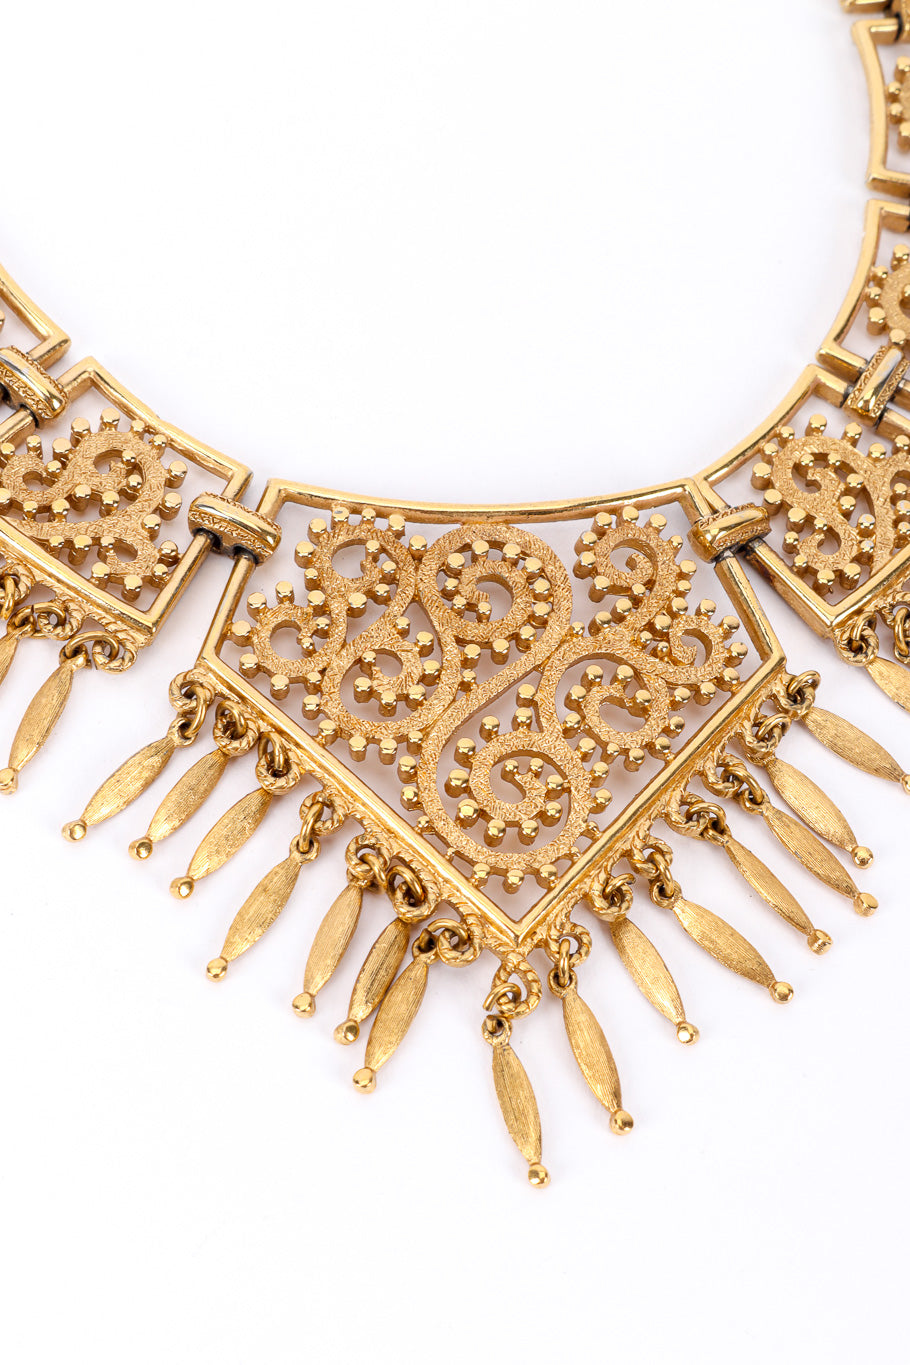 Vintage Monet Trapezoid Link Collar Necklace closeup of center charm on a white backdrop @Recessla